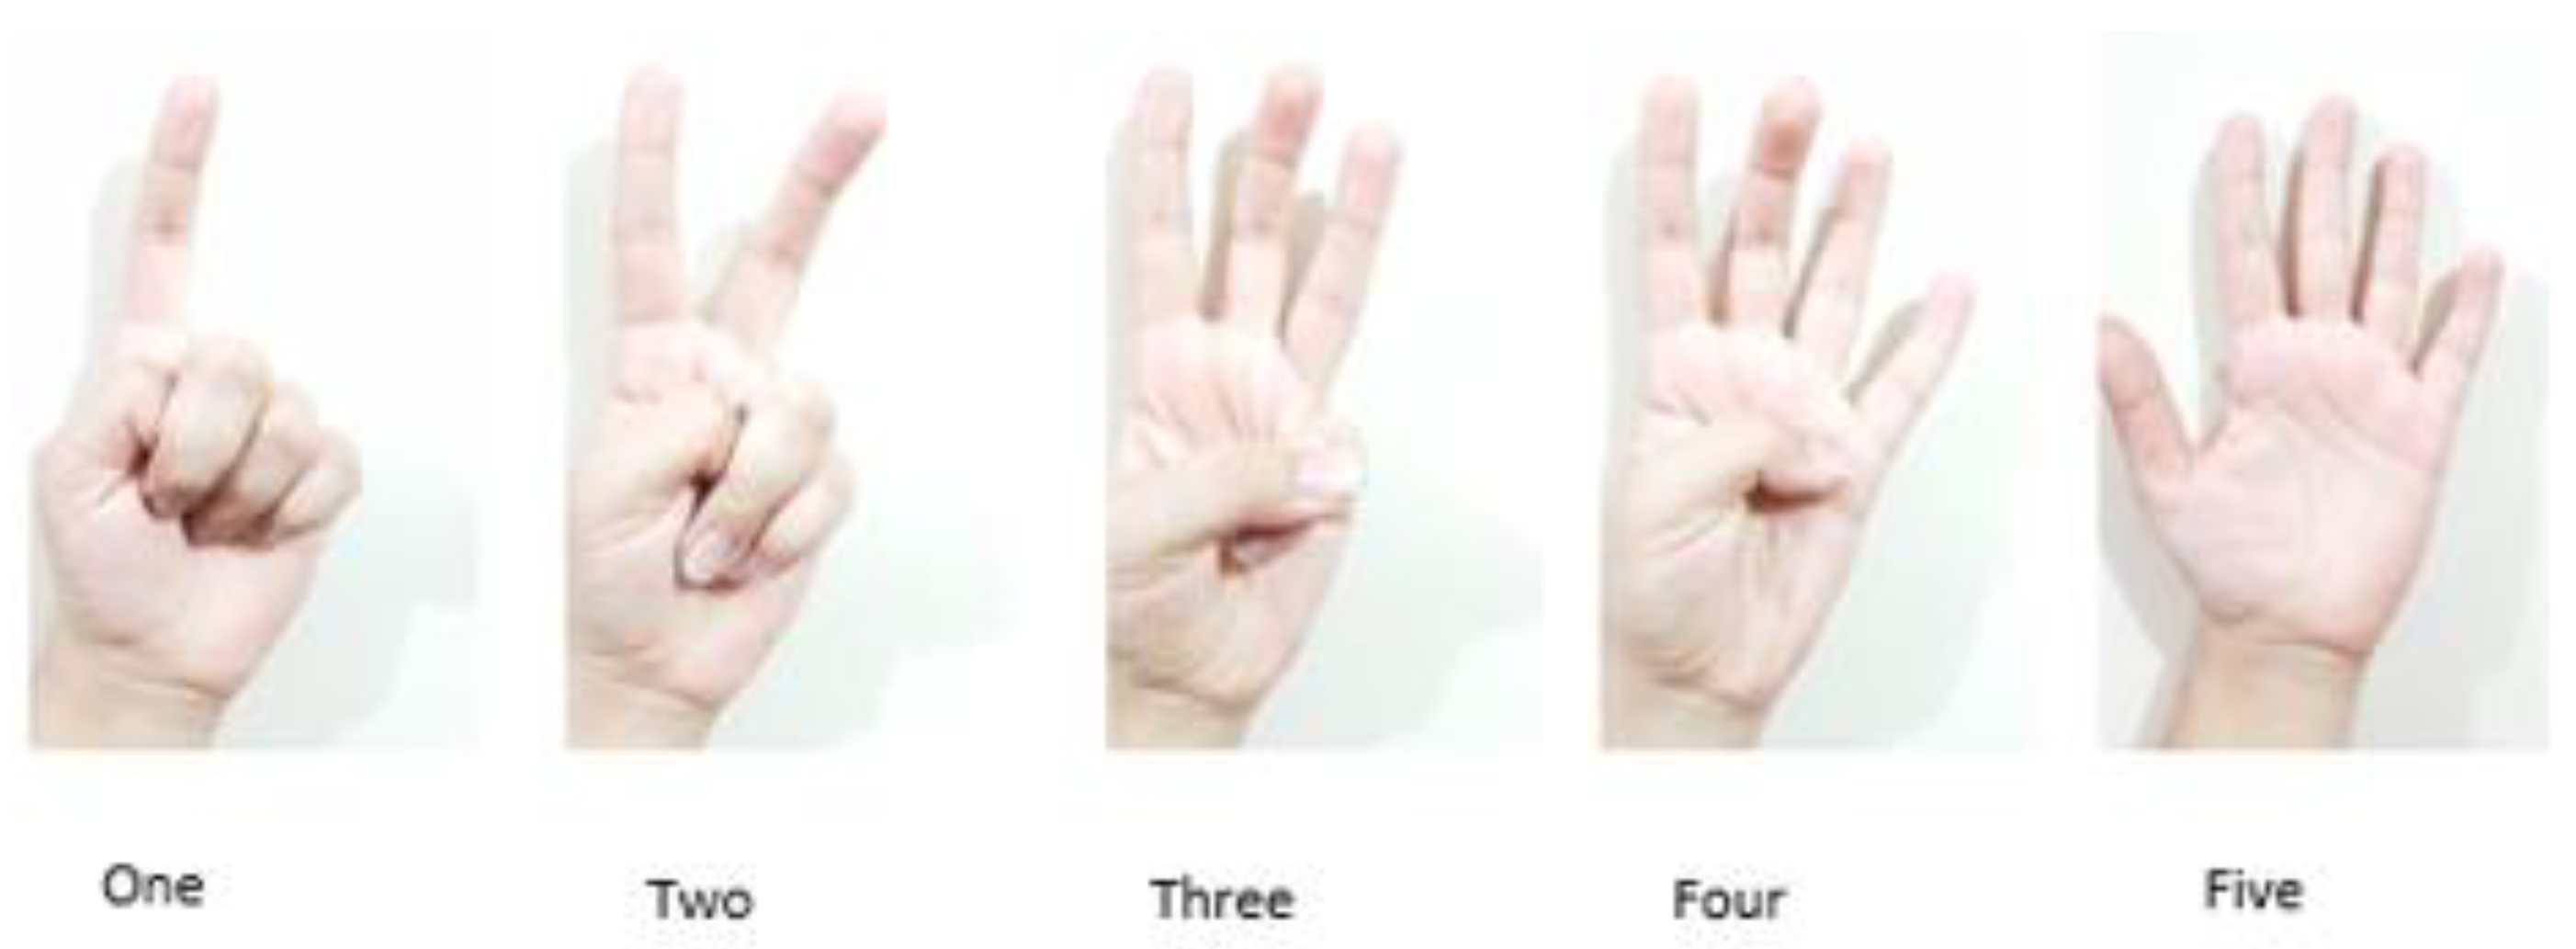 illuminati hand symbols chart